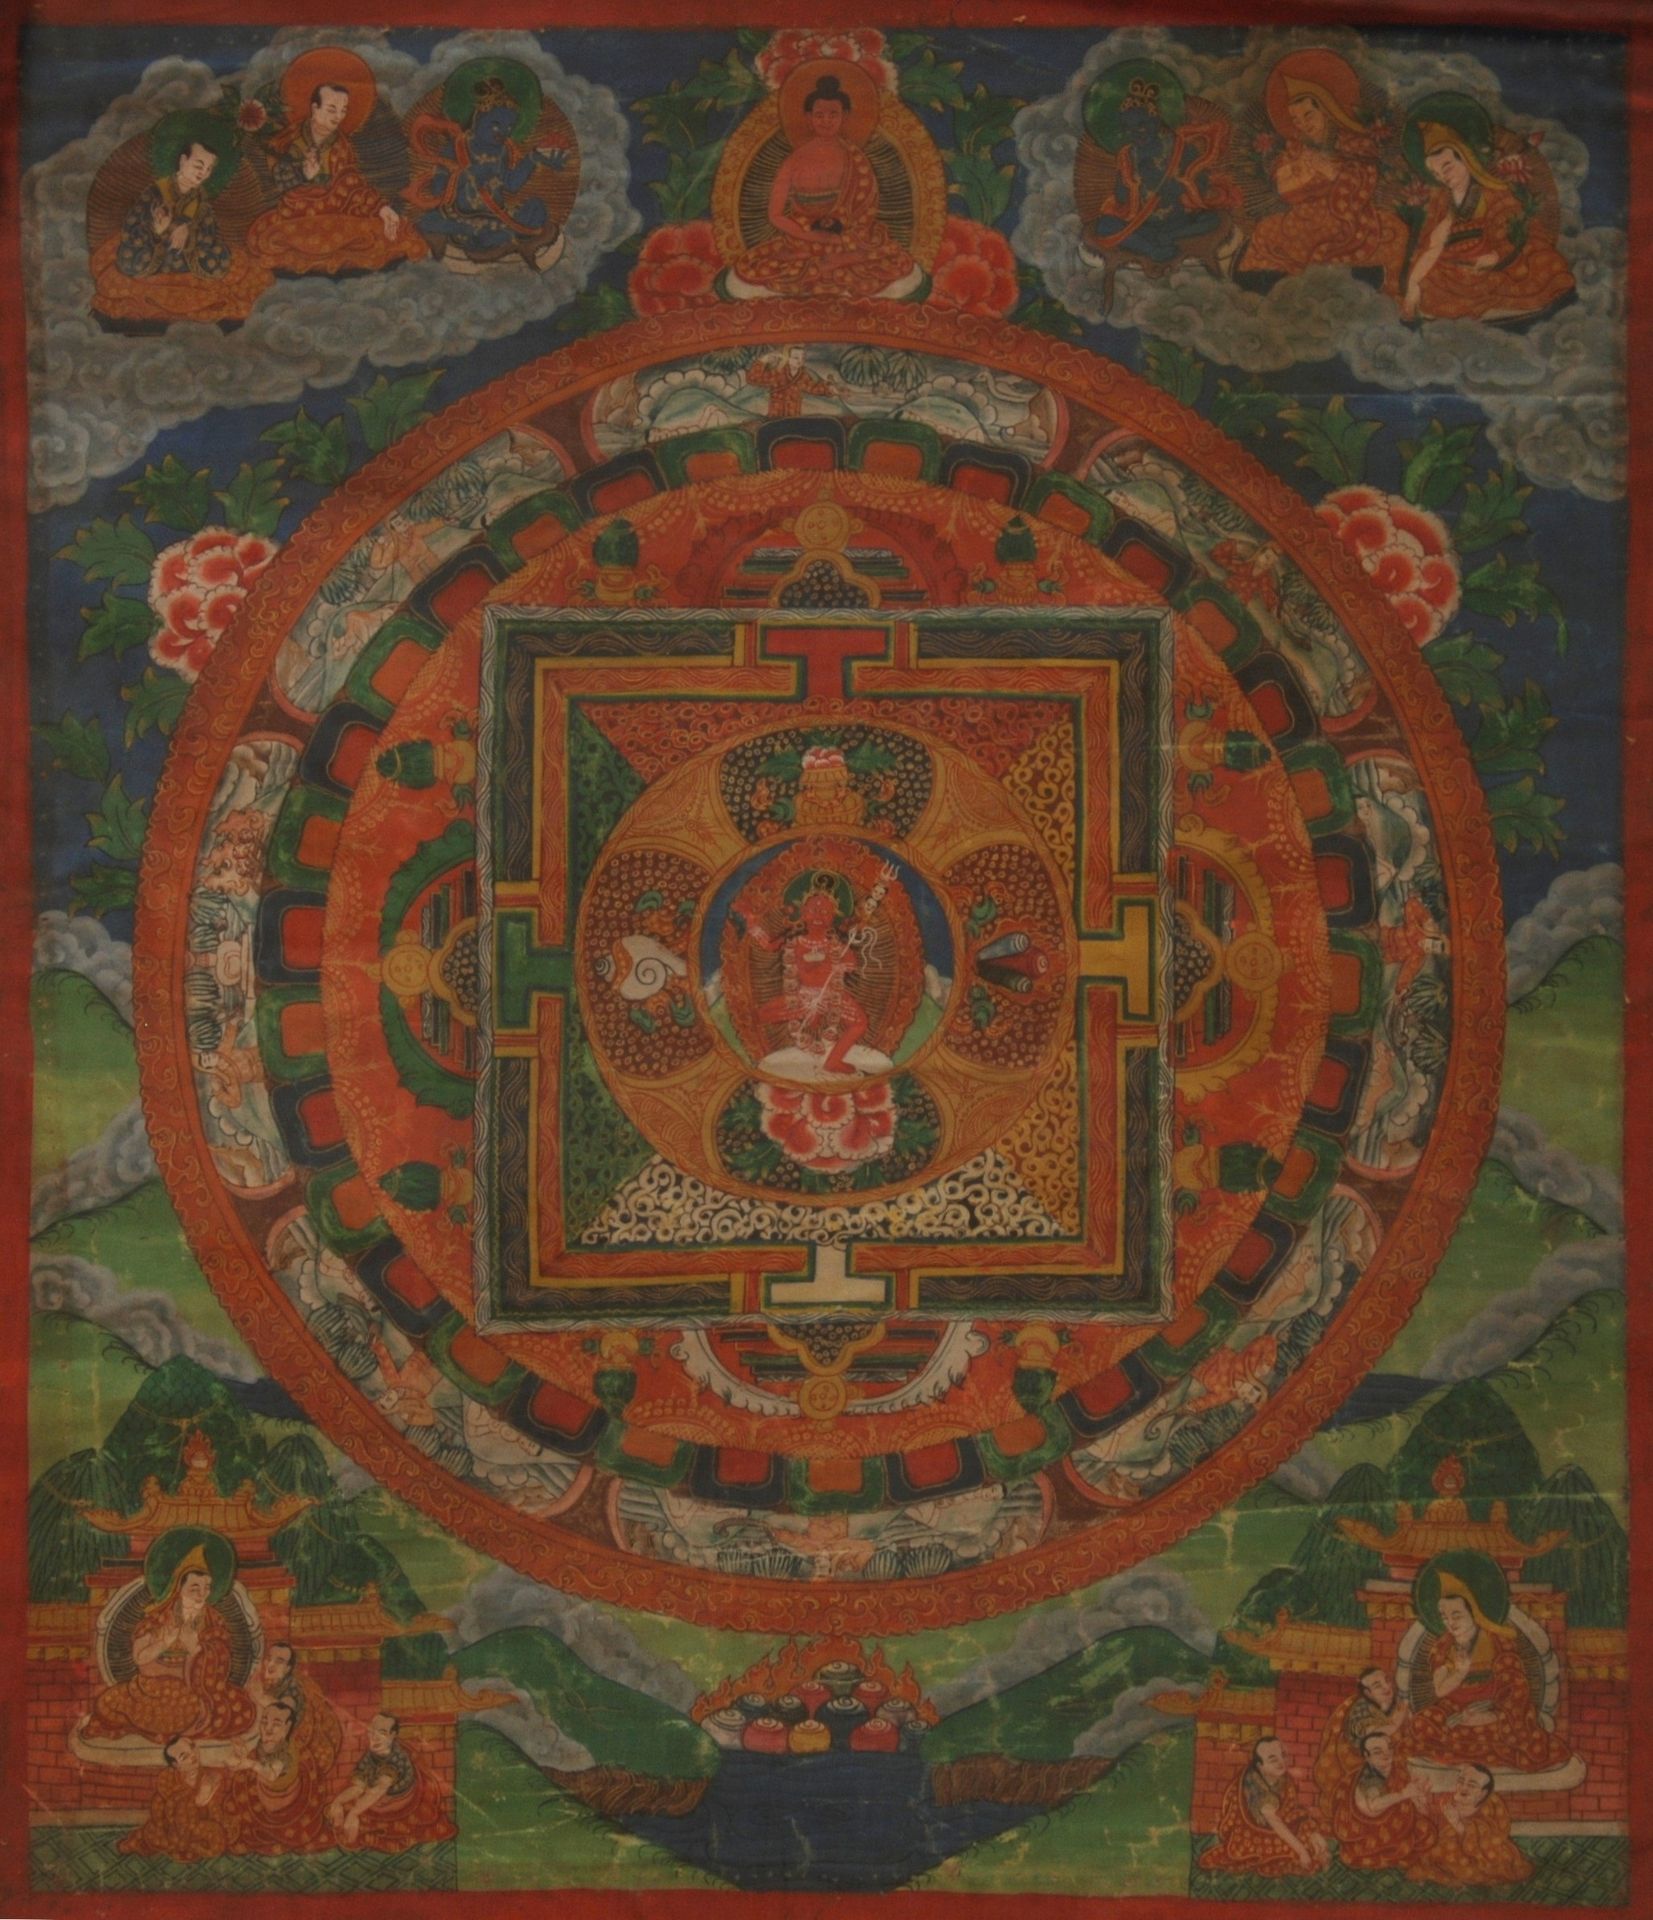 Thangka tibetana Thangka tibétain
Dimensions : cm 40x48